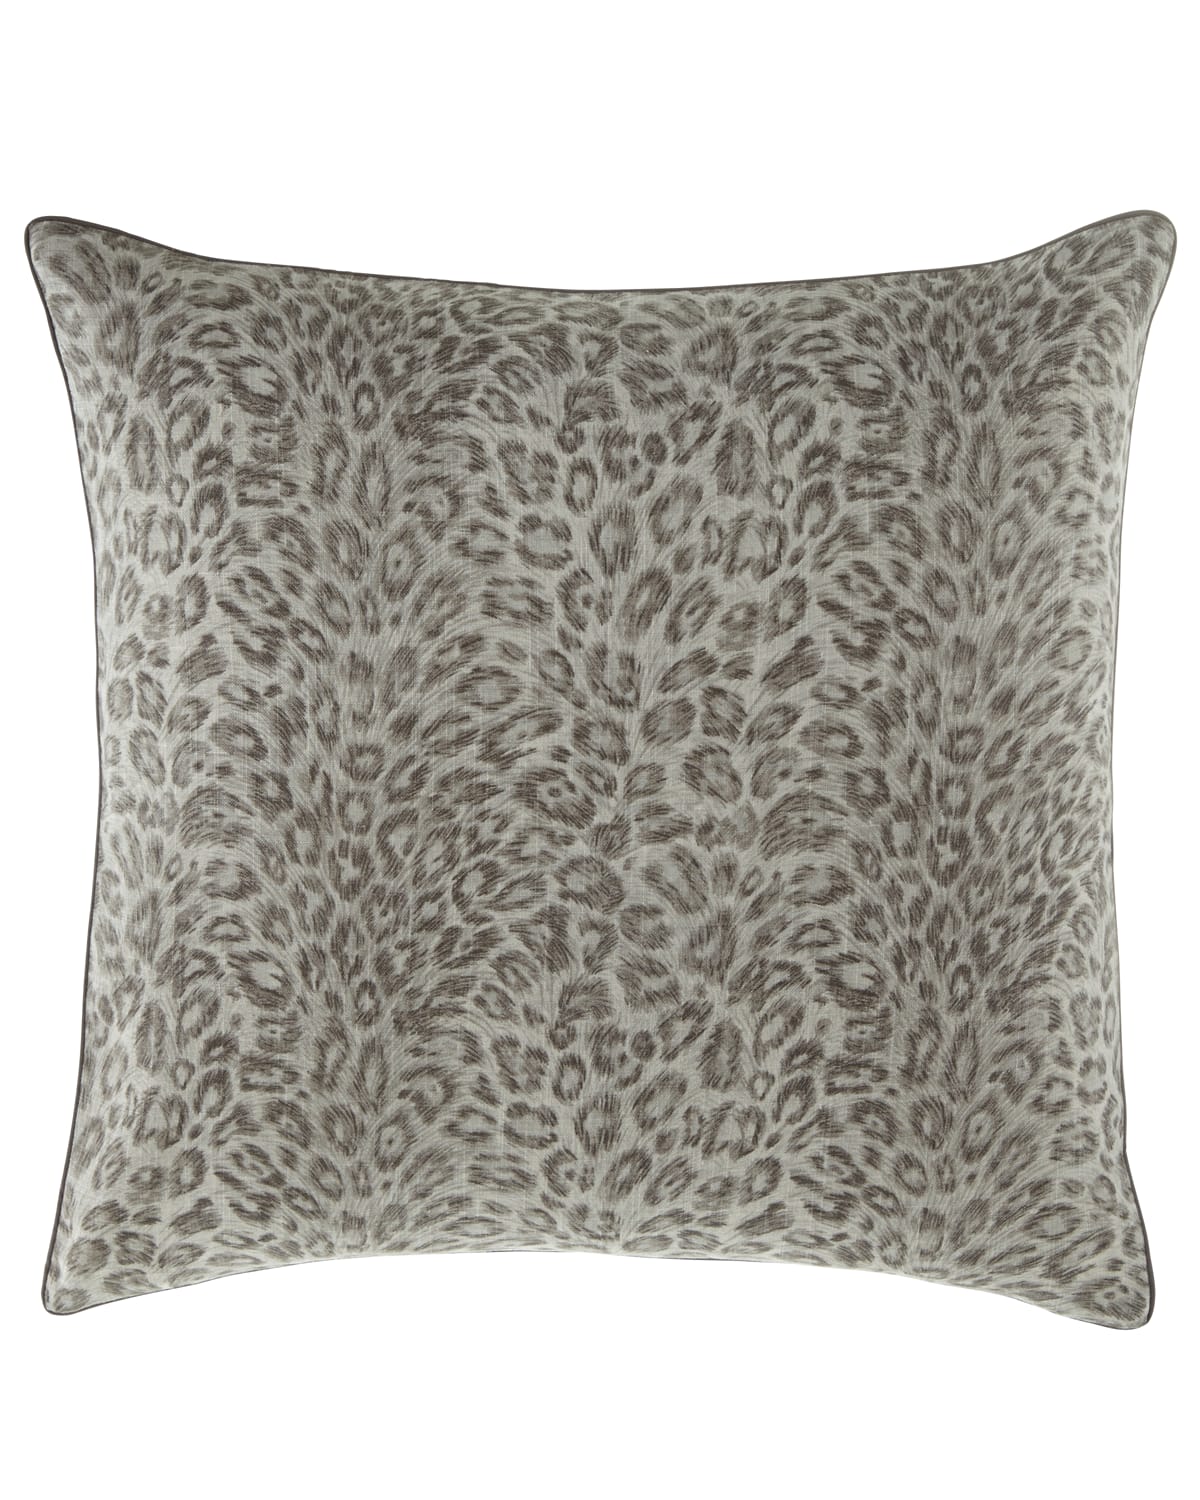 Image Jane Wilner Designs Bally Leopard-Print European Sham